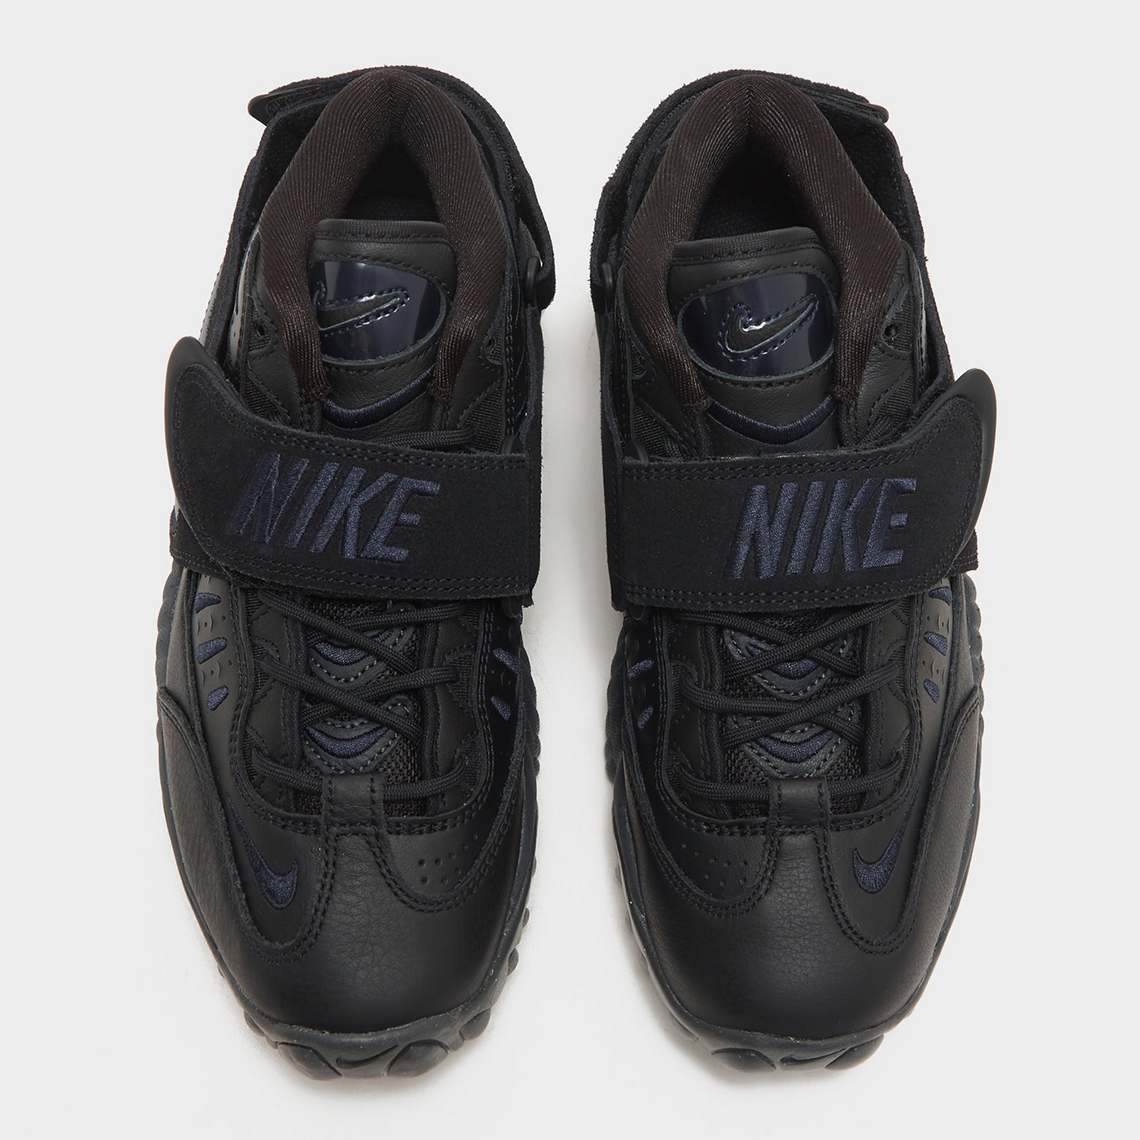 Nike nike sb eric koston shoe repair parts and supplies Black Obsidian Release Date 4